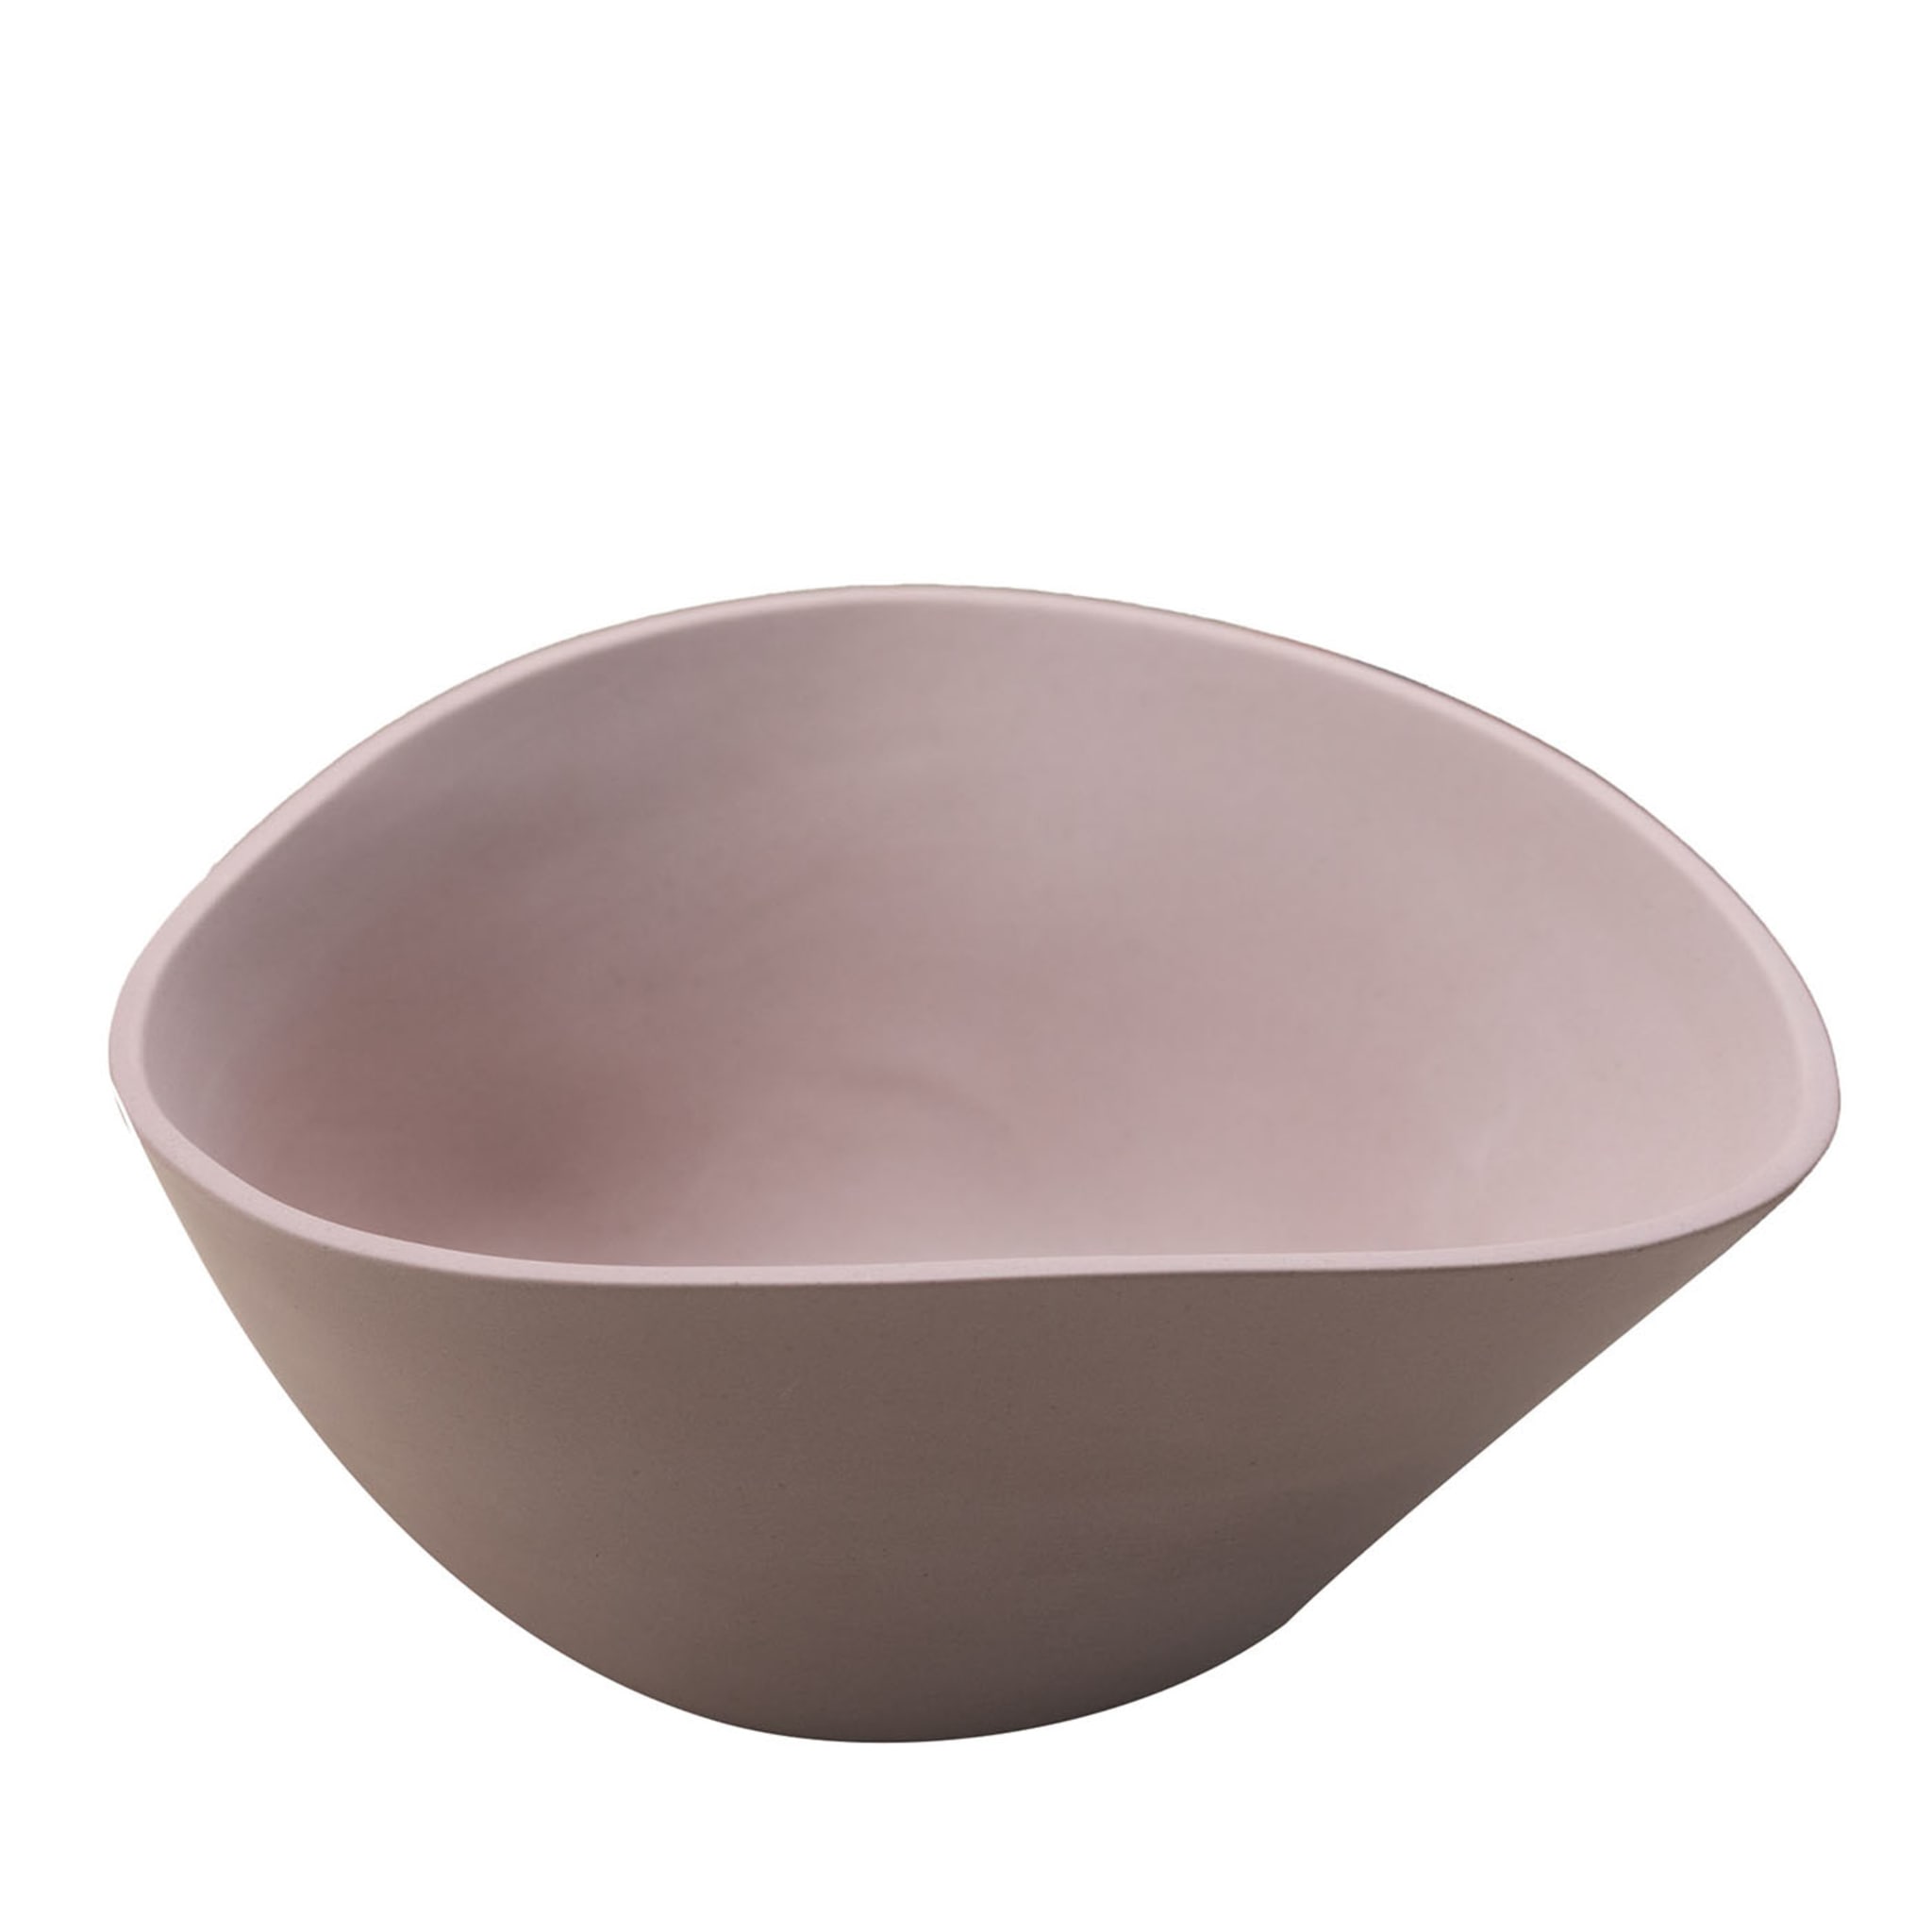 Fiore Set of 4 Porcelain Bowls - Alternative view 1